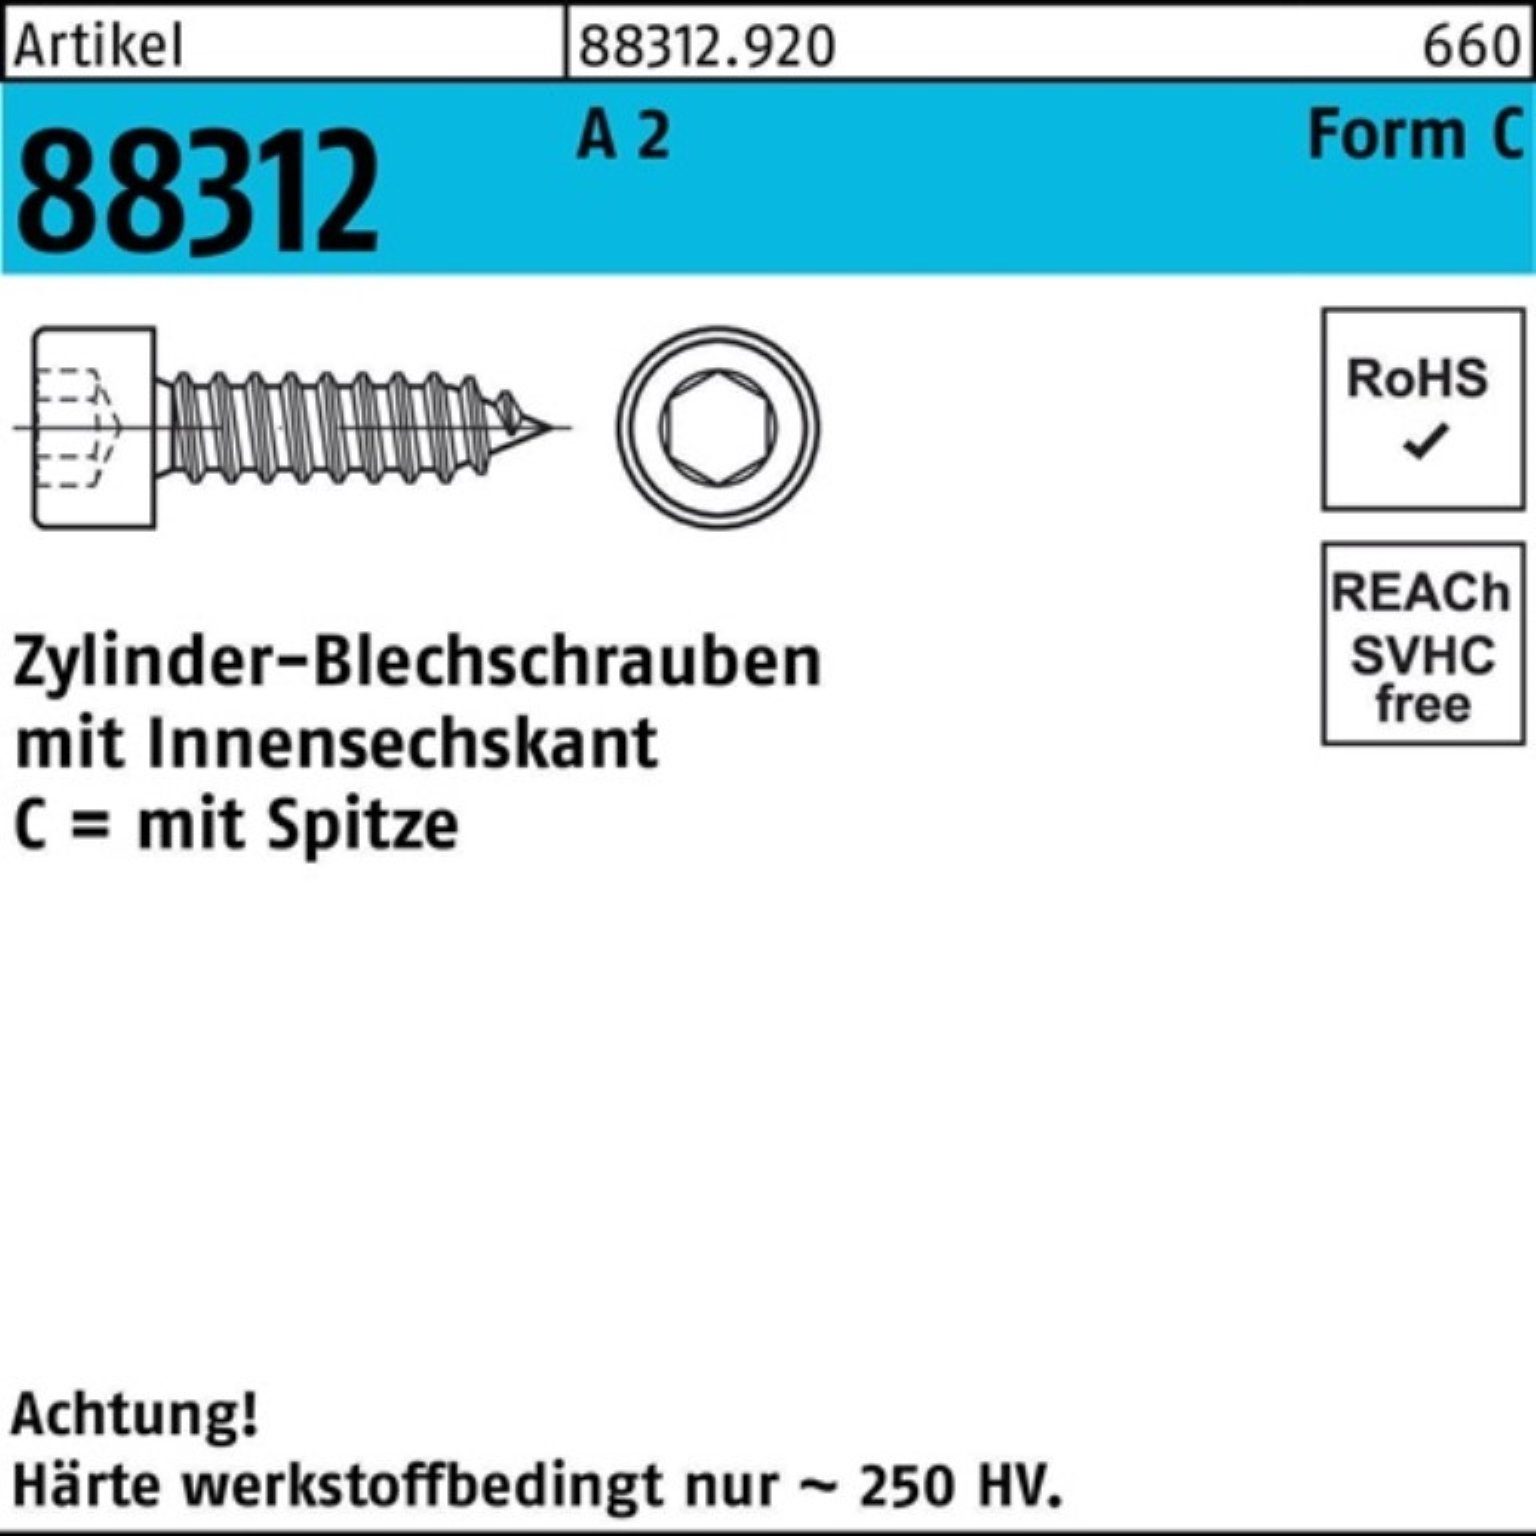 Pack 32 A C 5,5x Zylinderblechschraube R Blechschraube 88312 Spitze/Innen-6kt 200er Reyher